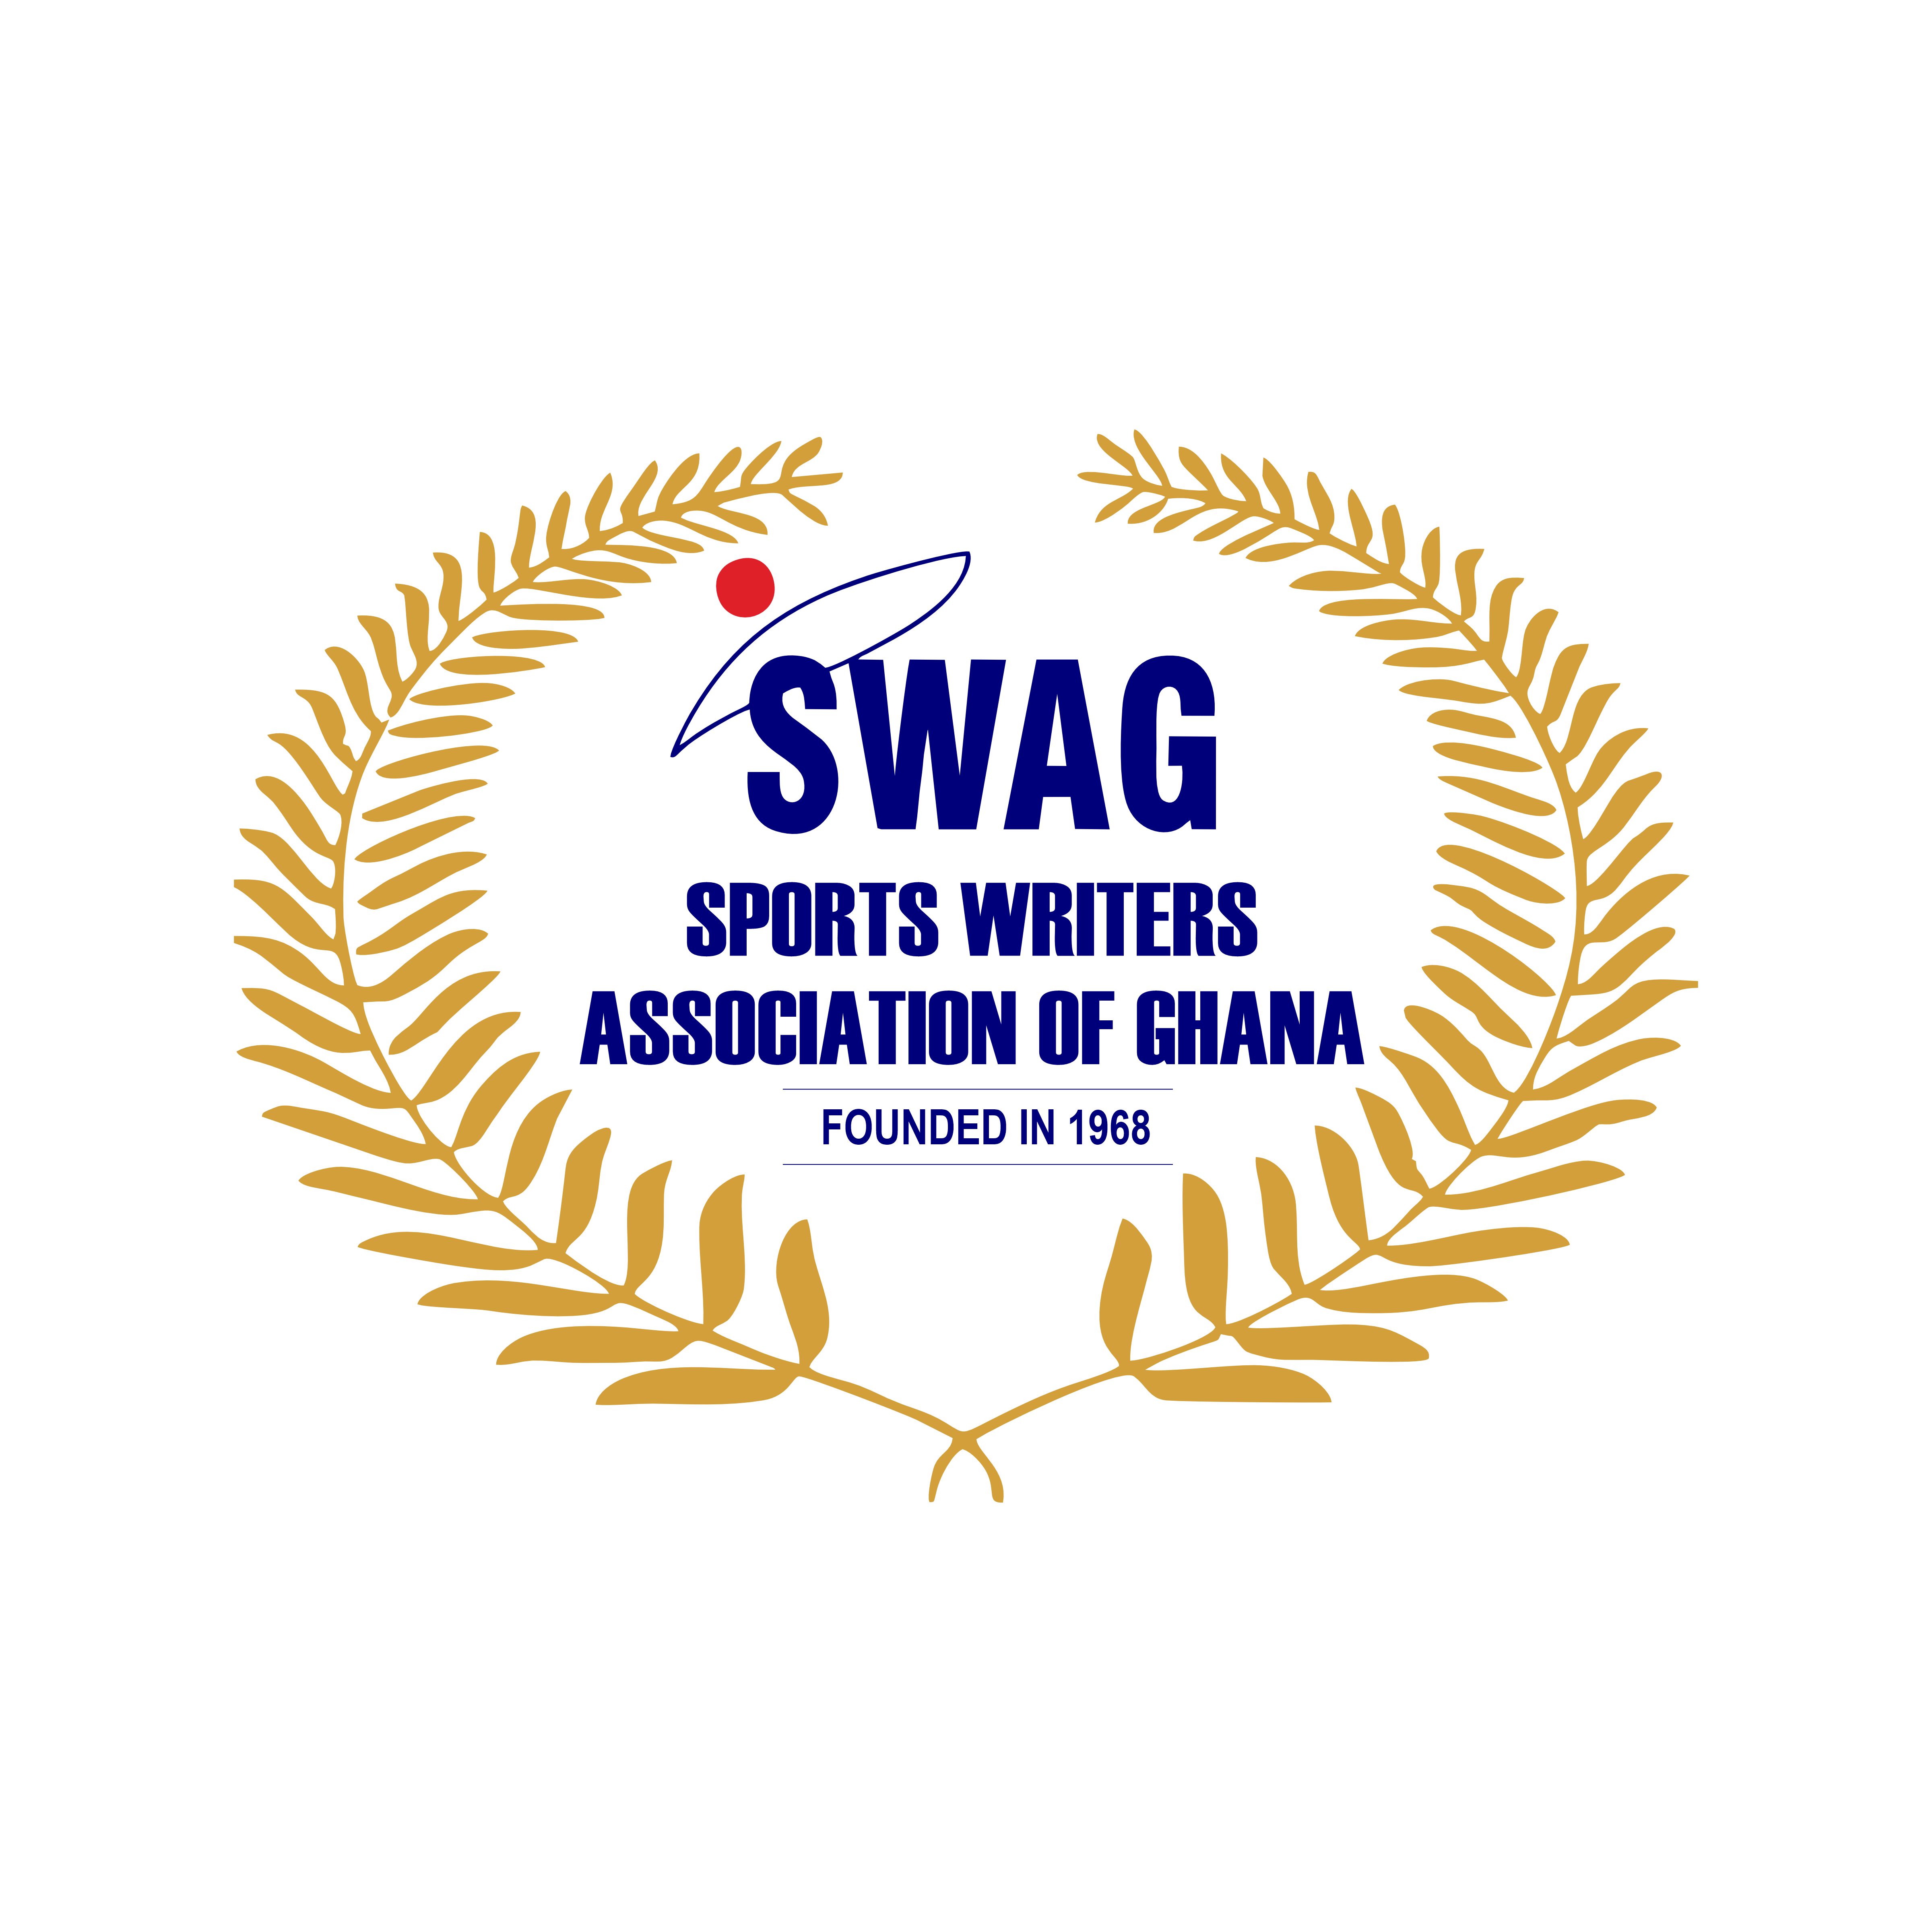 Sports Writers Association of Ghana (SWAG)